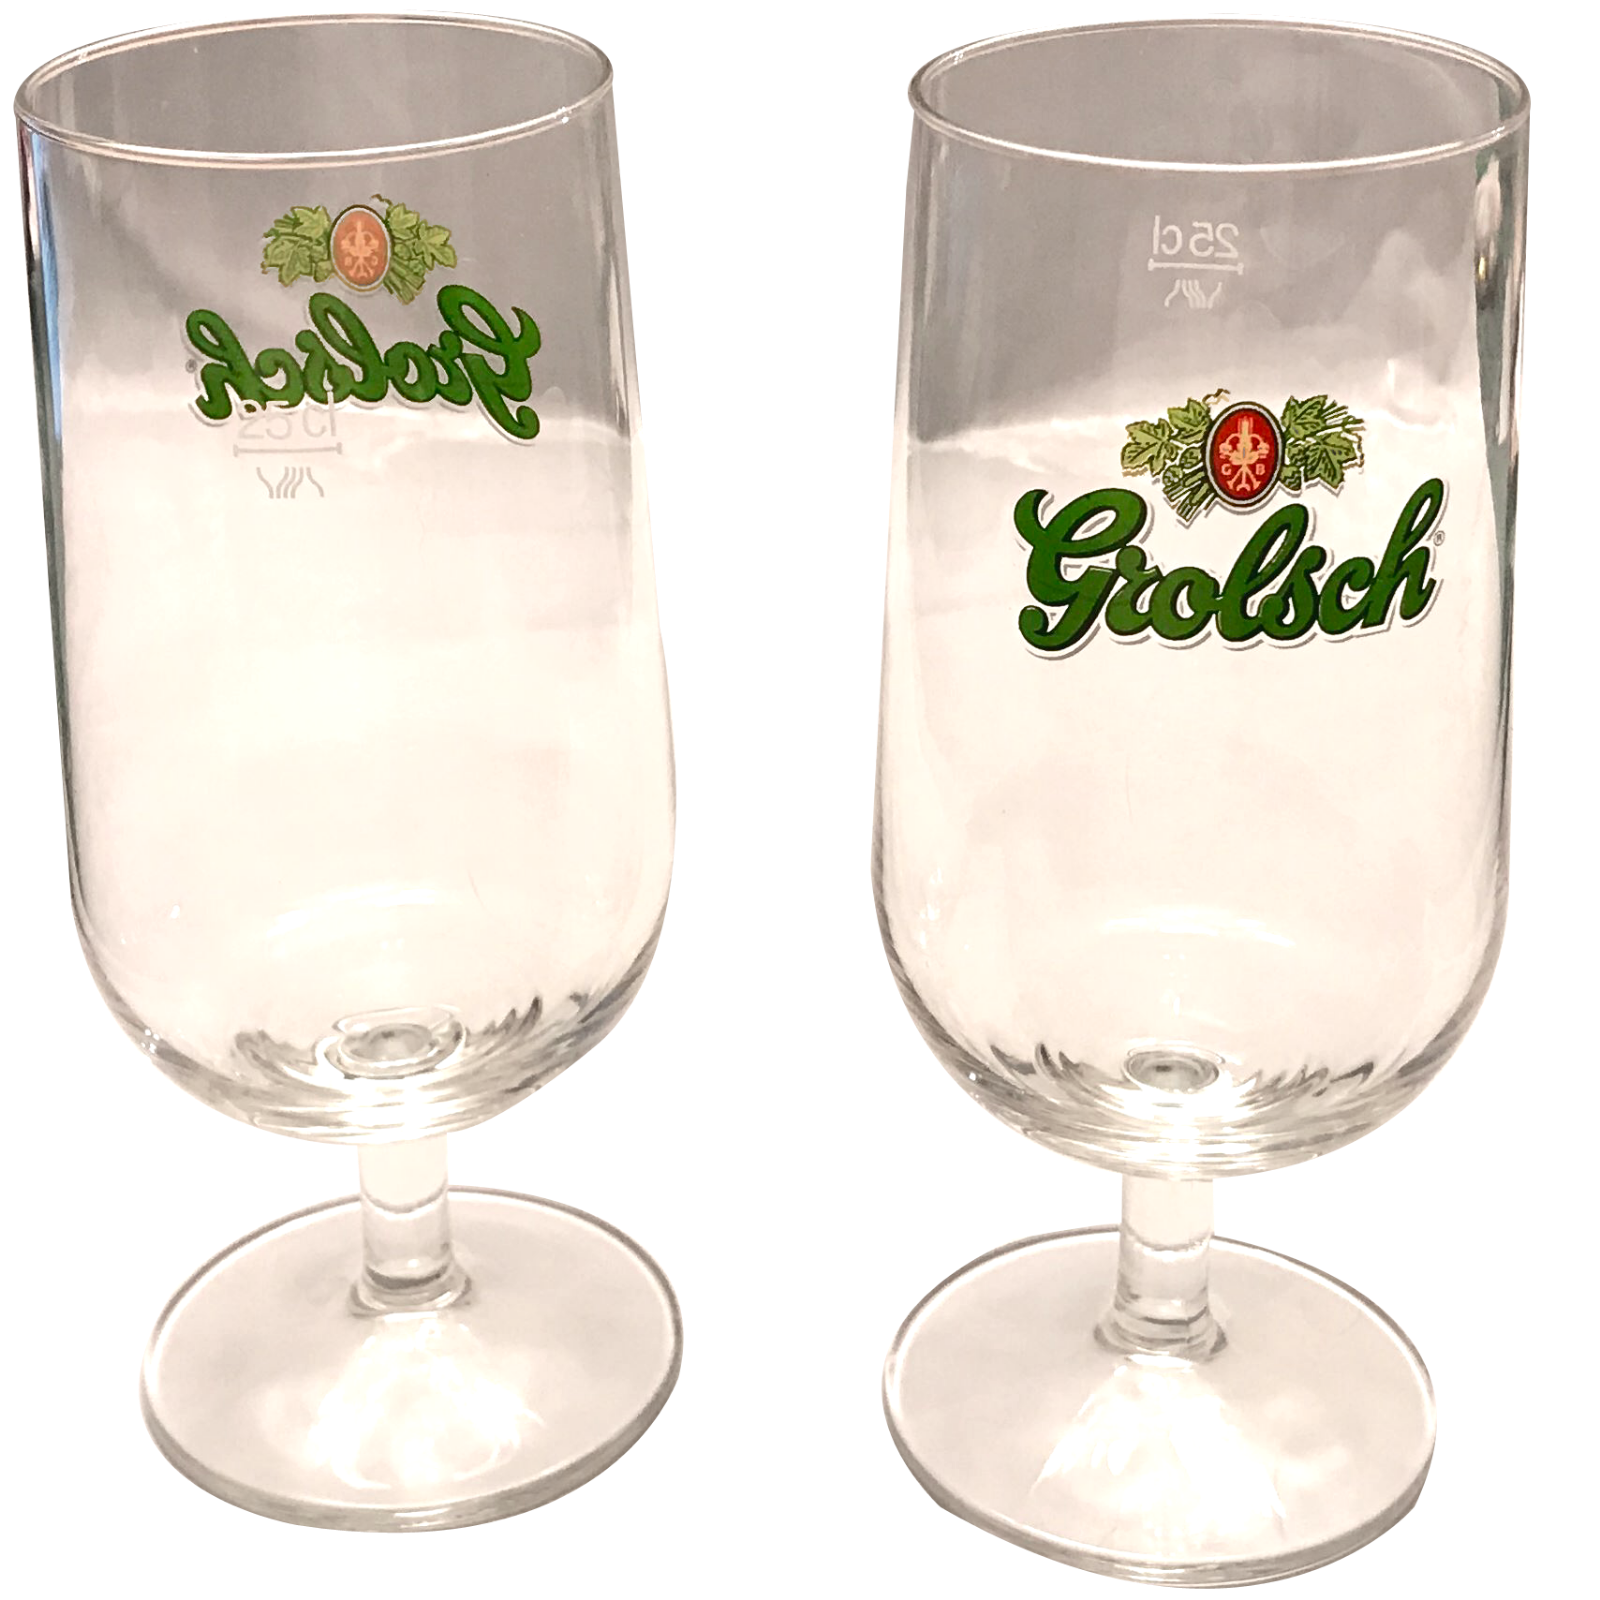 Stella Artois Belgian Chalice Beer Glasses 0.5L - Set of 2